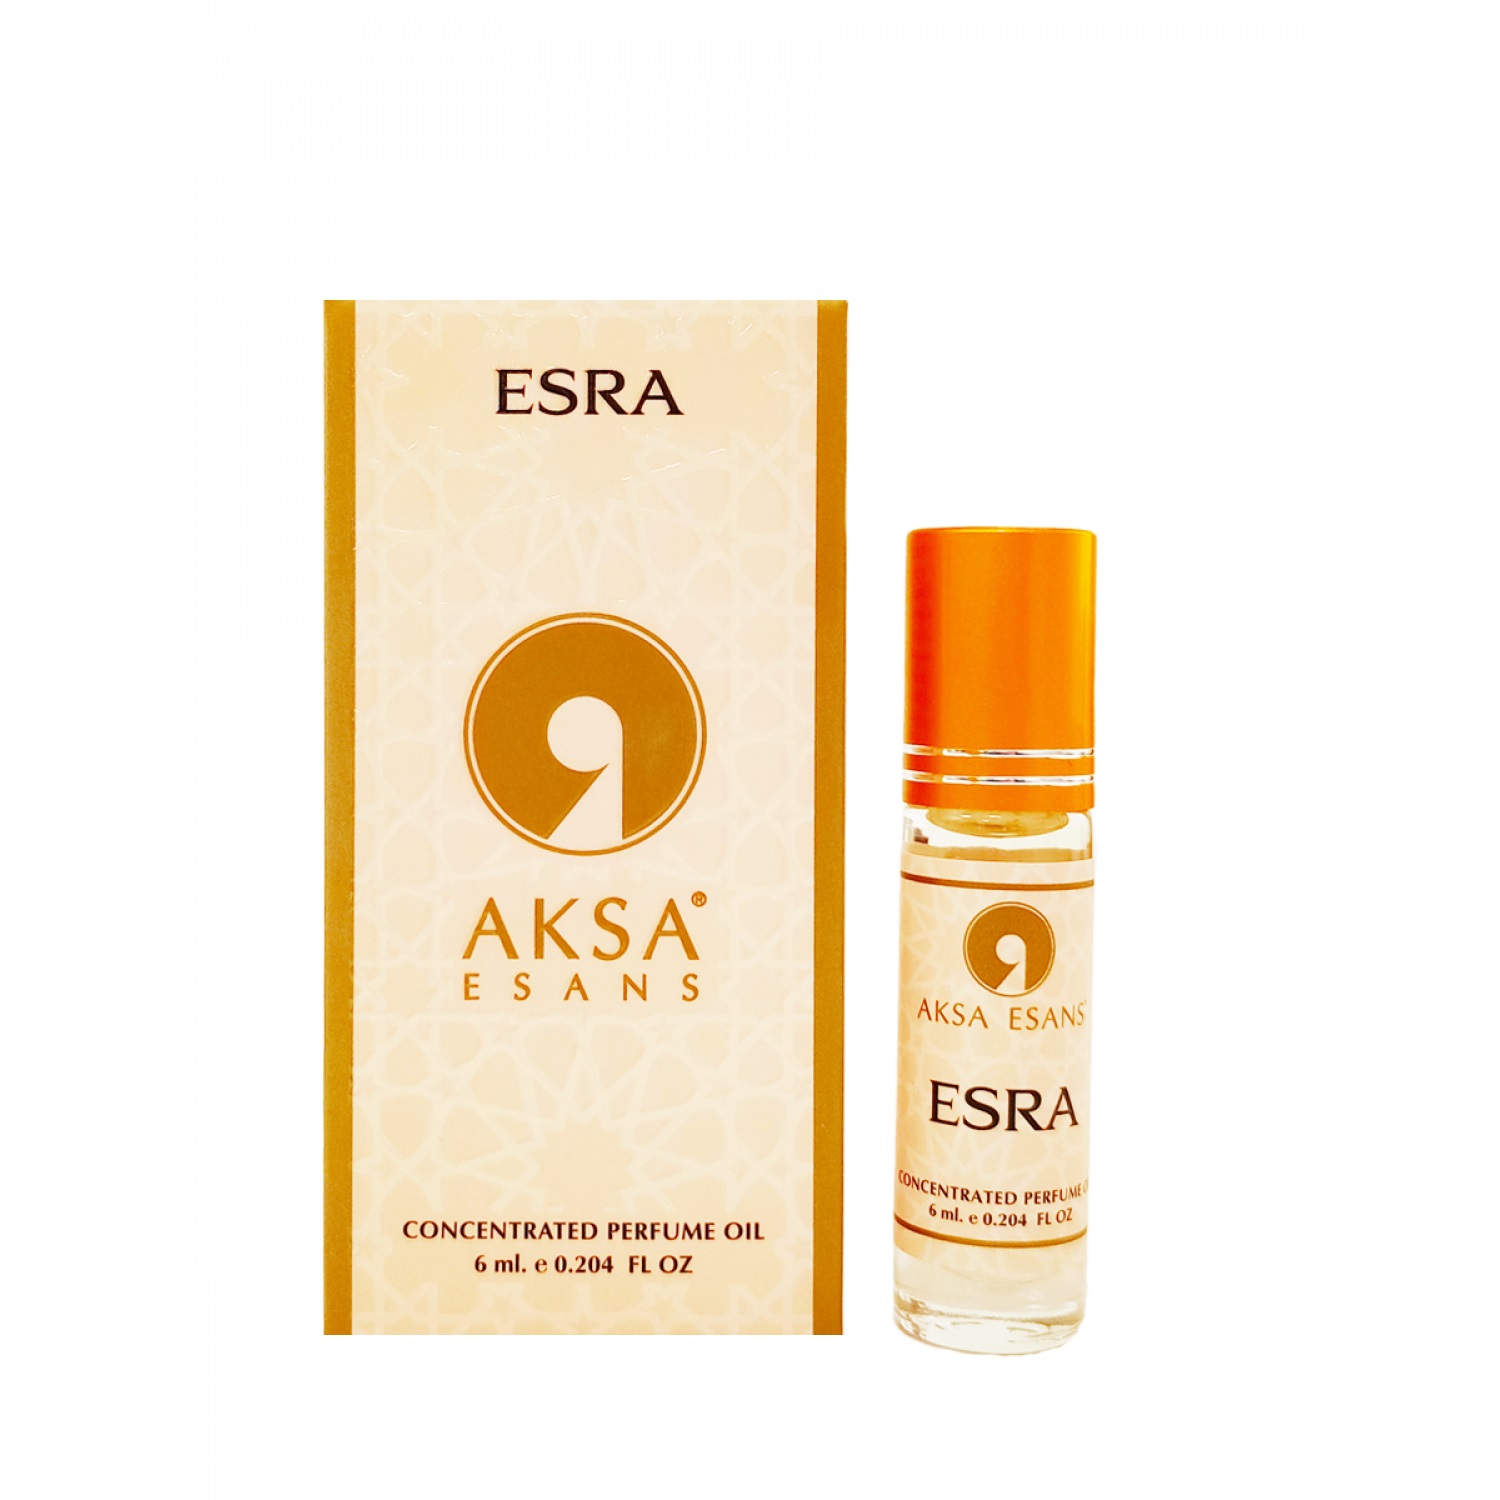 ESRA Concentrated Perfume Oil, Aksa Esans (ЭСРА турецкие роликовые масляные духи, Акса Эсанс), 6 мл.